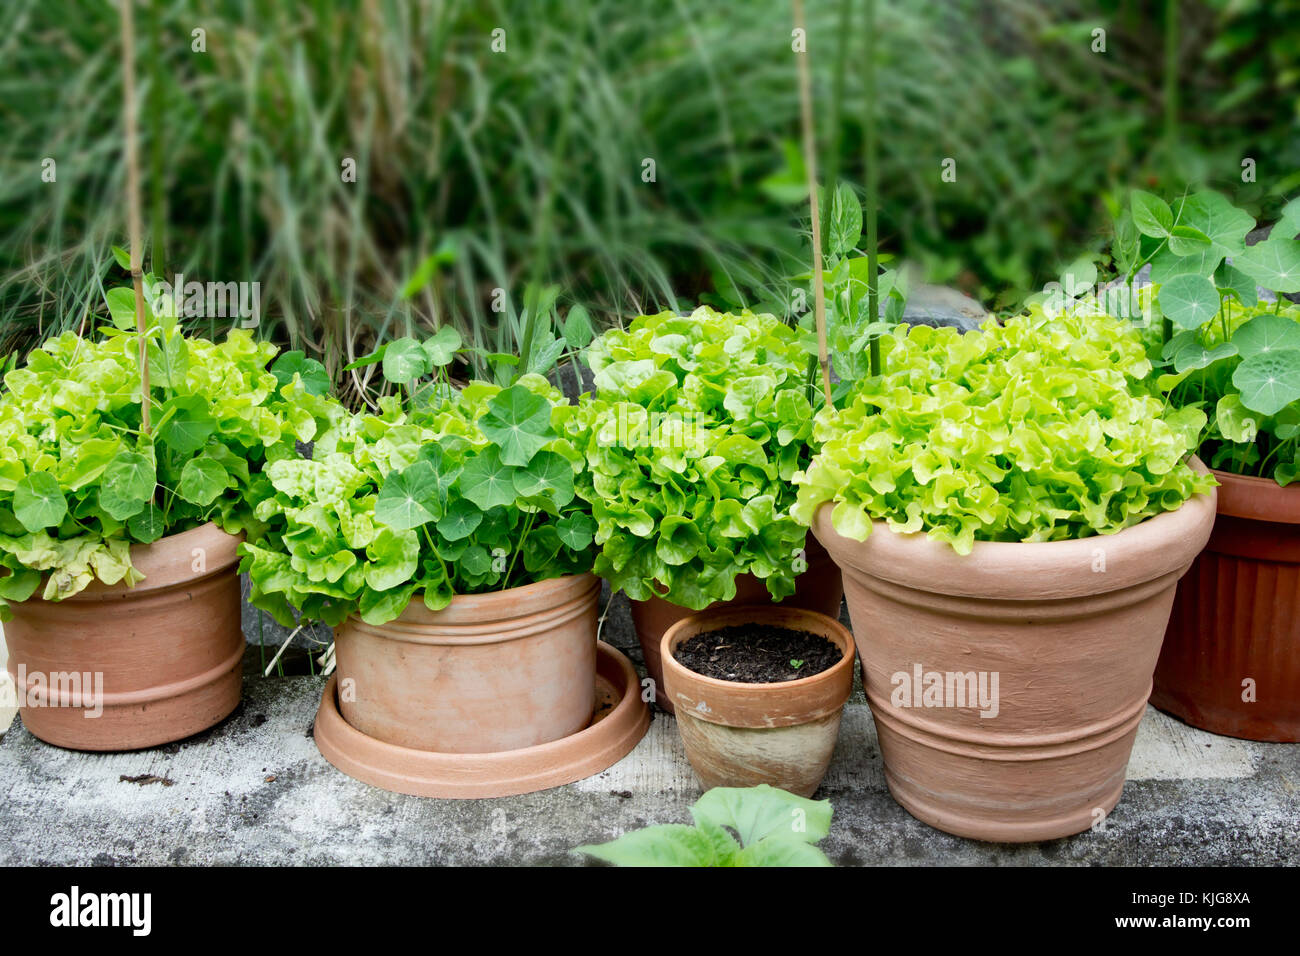 Nasturtium and variation of lettuce in plant pots in garden Stock Photo